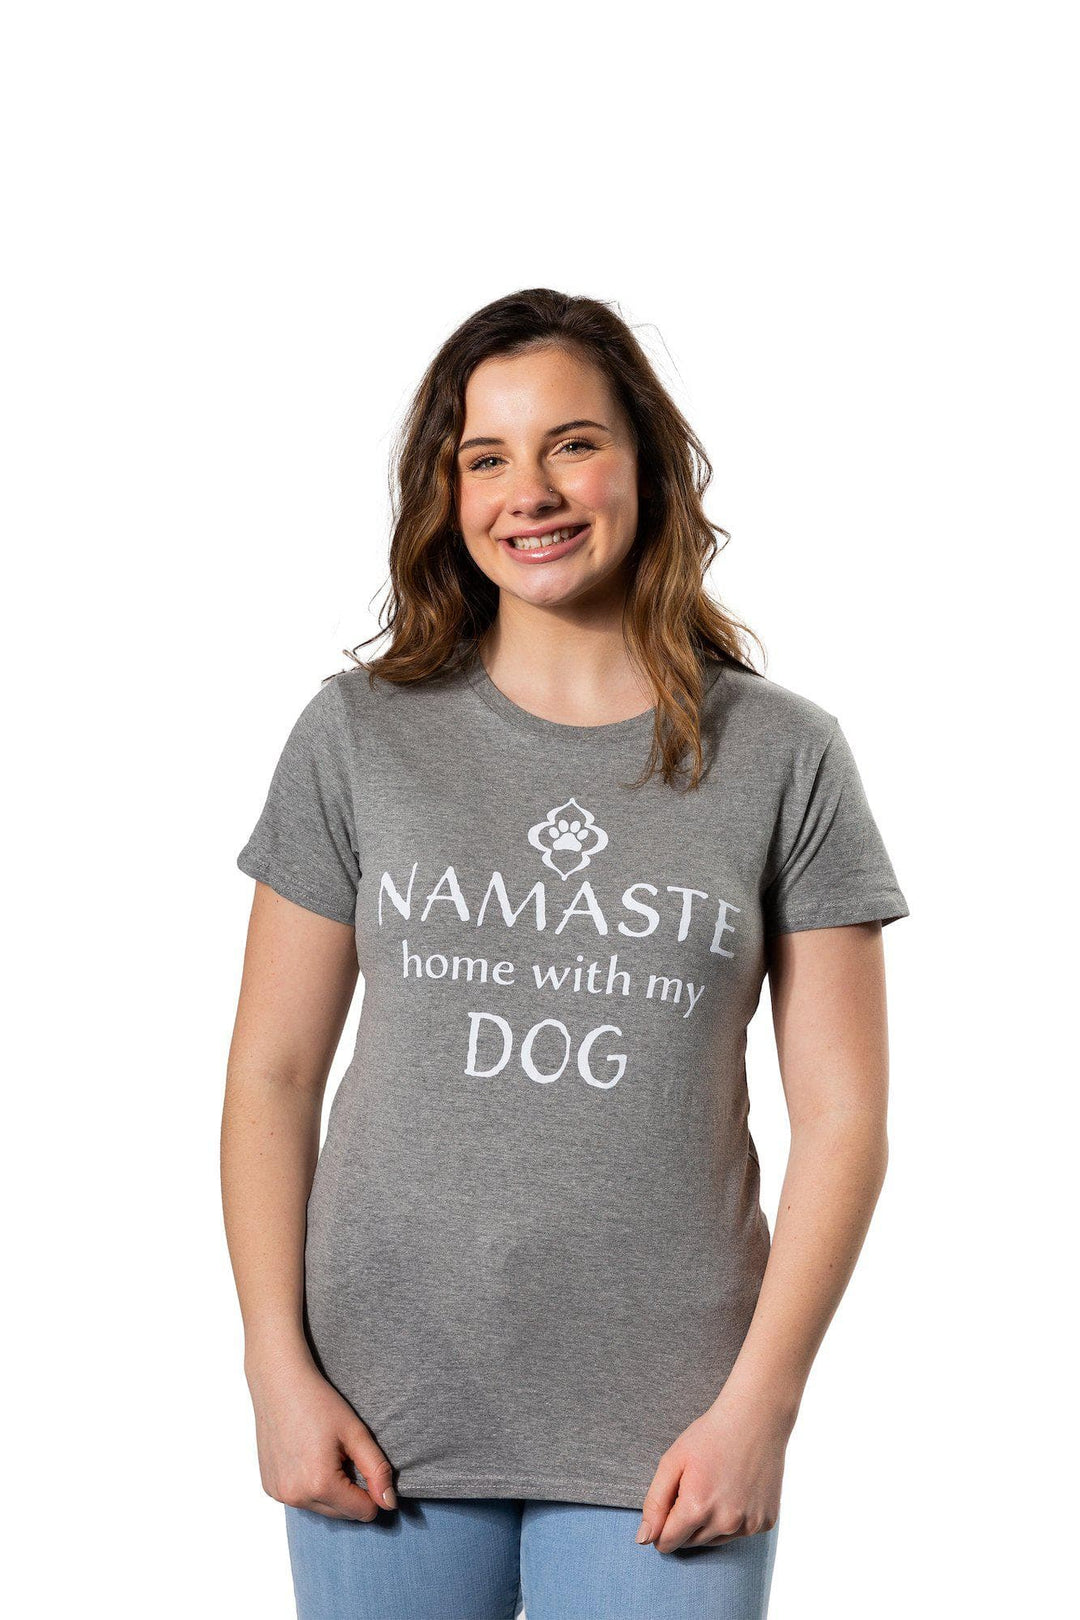 Namaste Home With My Dog Women's Tshirt  -  Crazy Dog T-Shirts